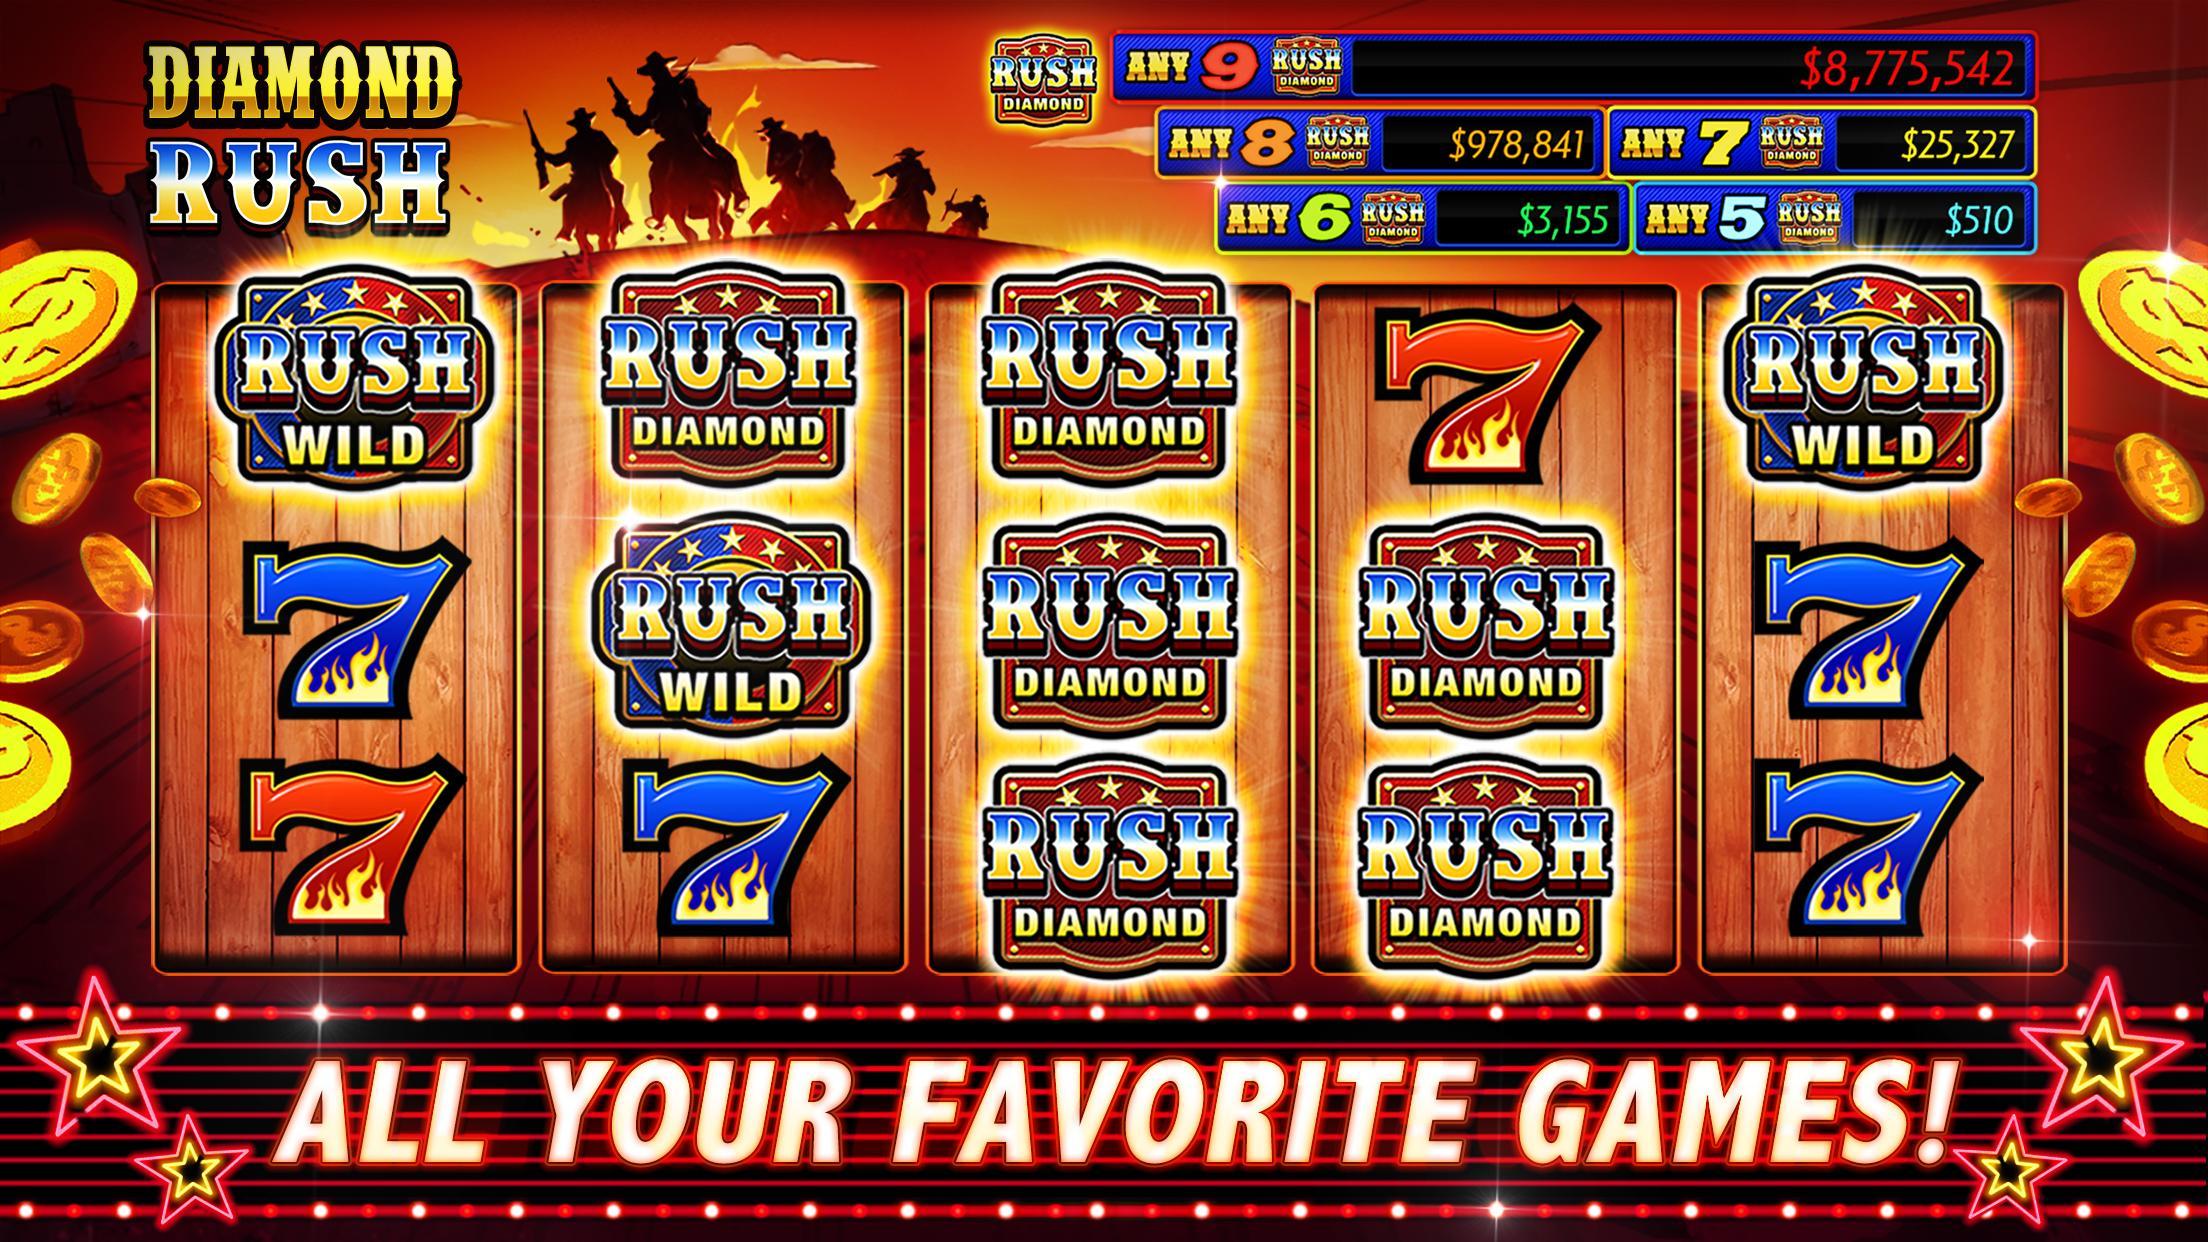 slots vegas classic wild win slot casino 777 machines super app play apk games las apkpure bonus huge